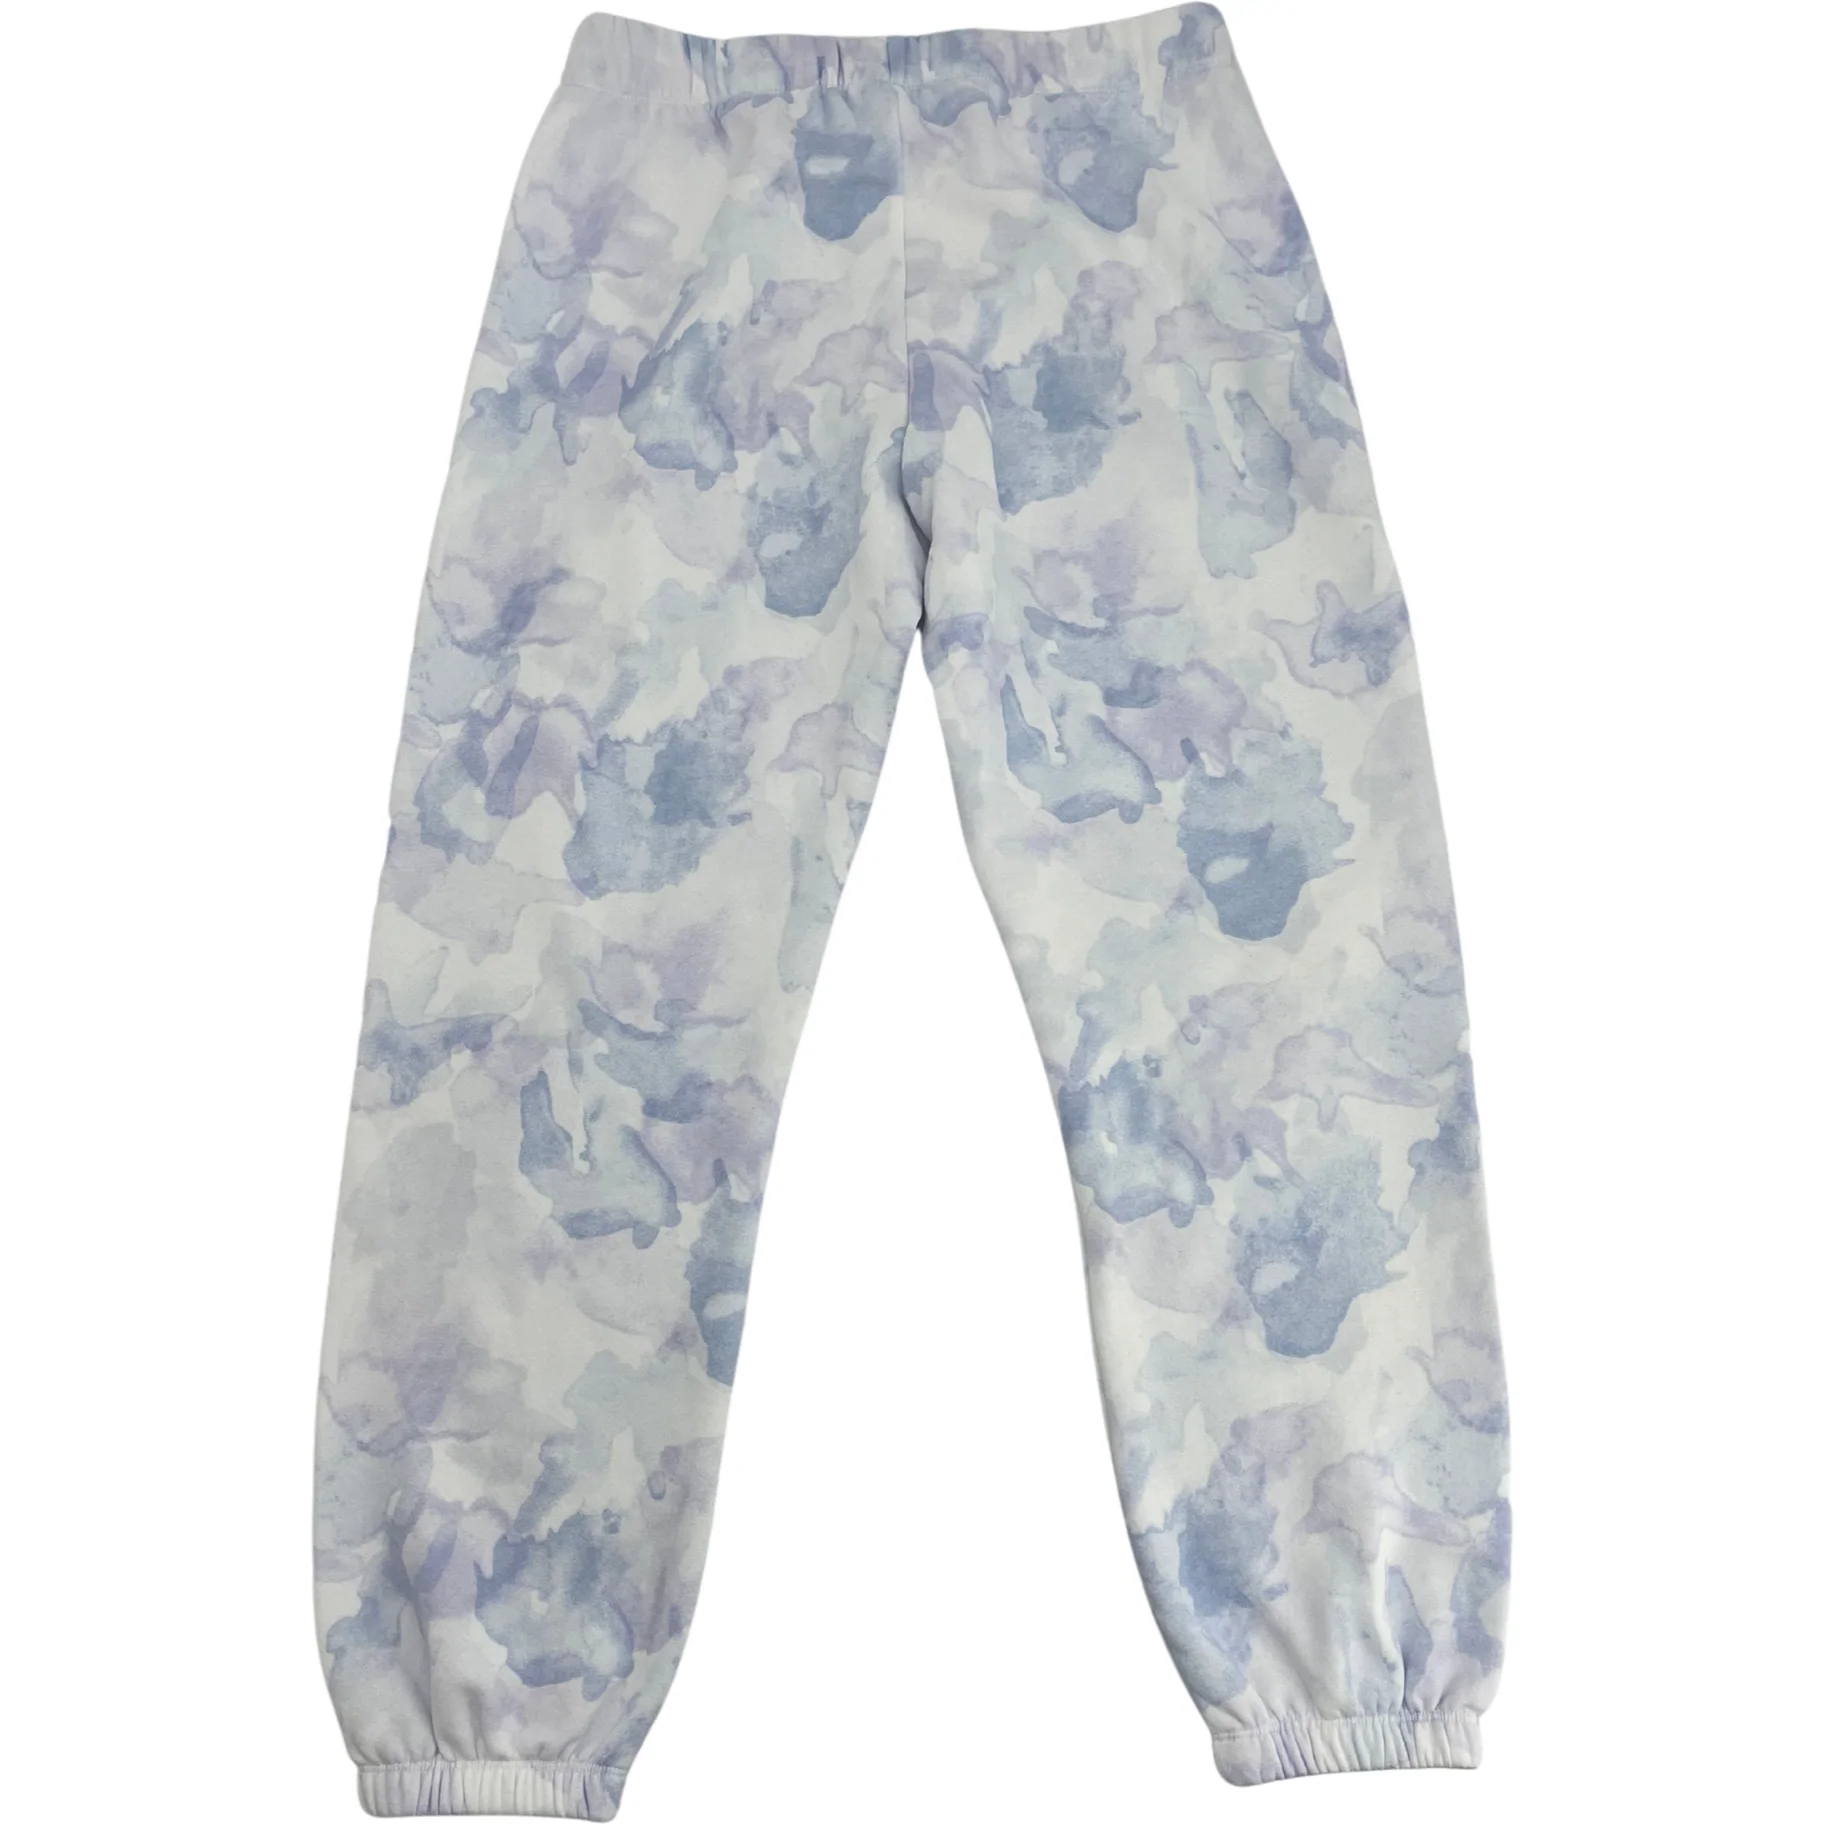 Lazy Pants Women's Sweatpants / White & Purple / Camouflage / Size Large **No Tags**